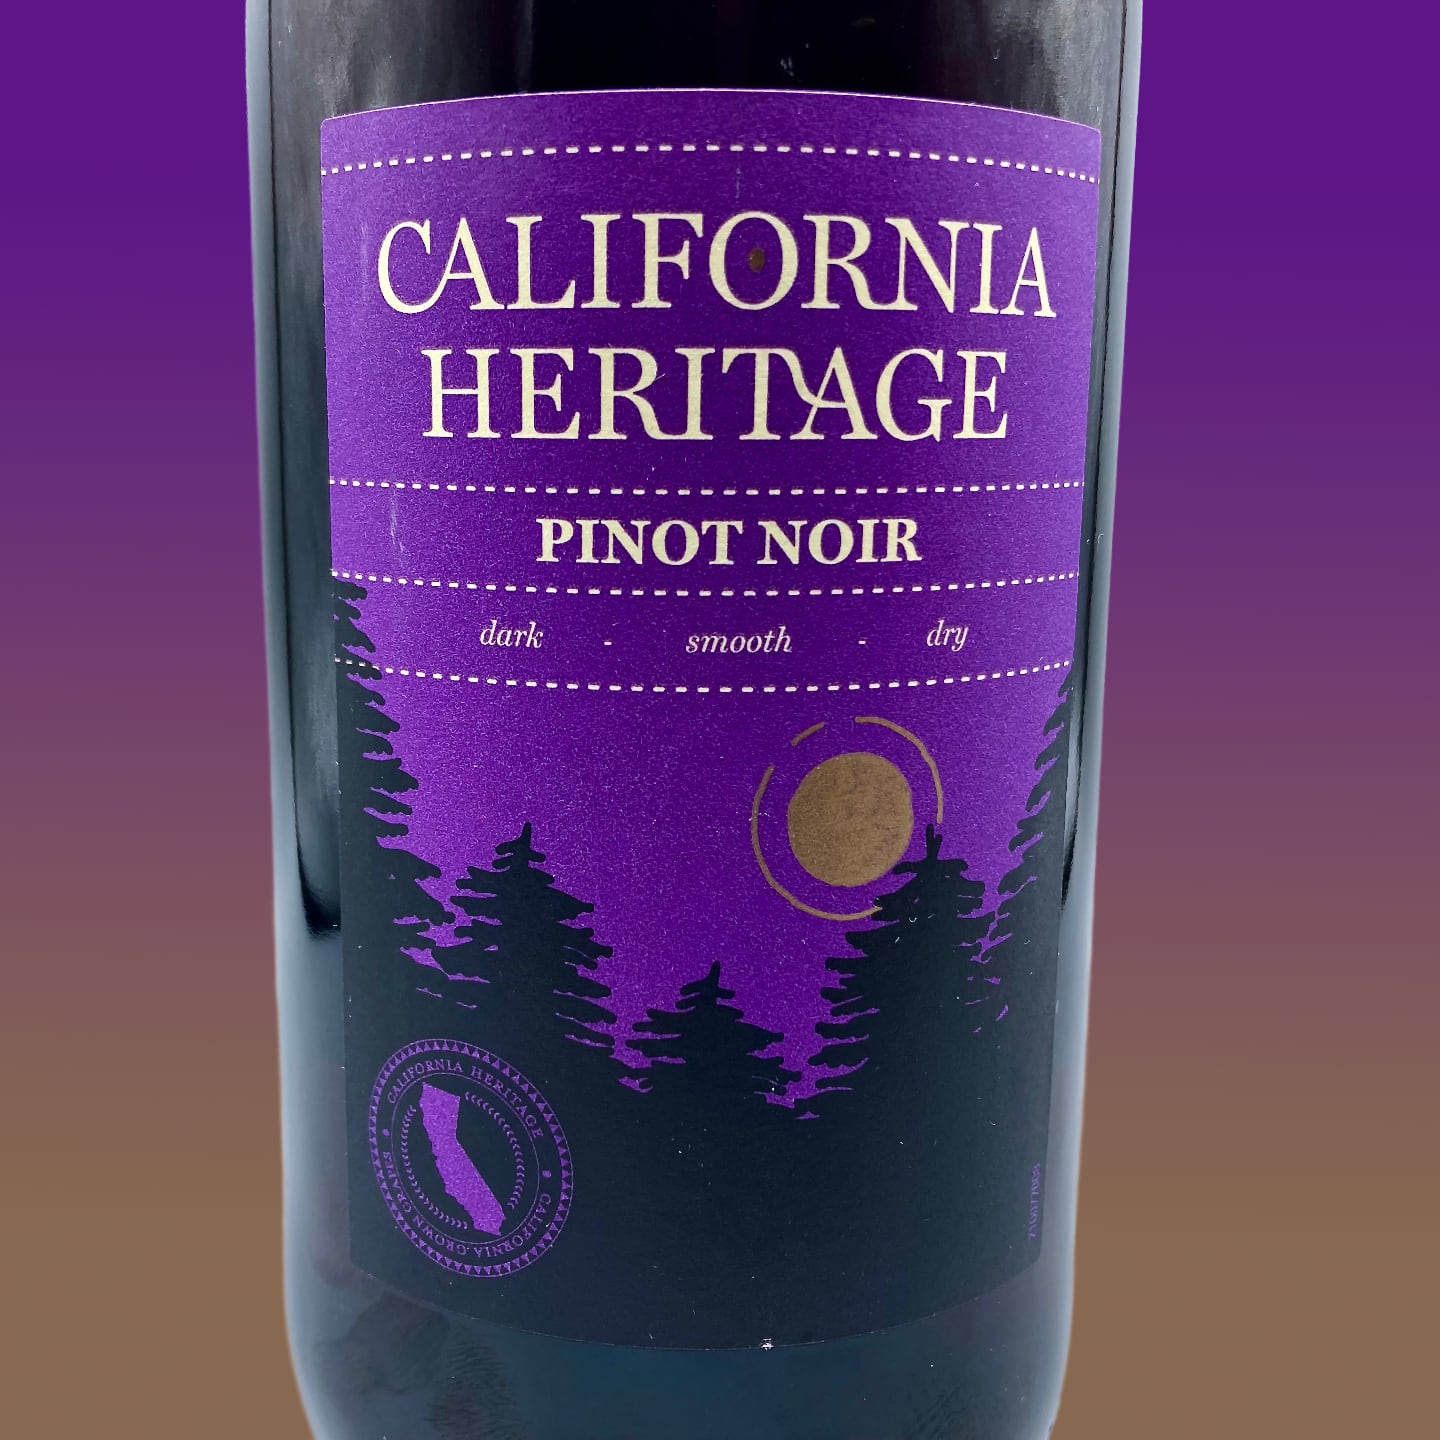 Aldi's California Heritage Pinot Noir